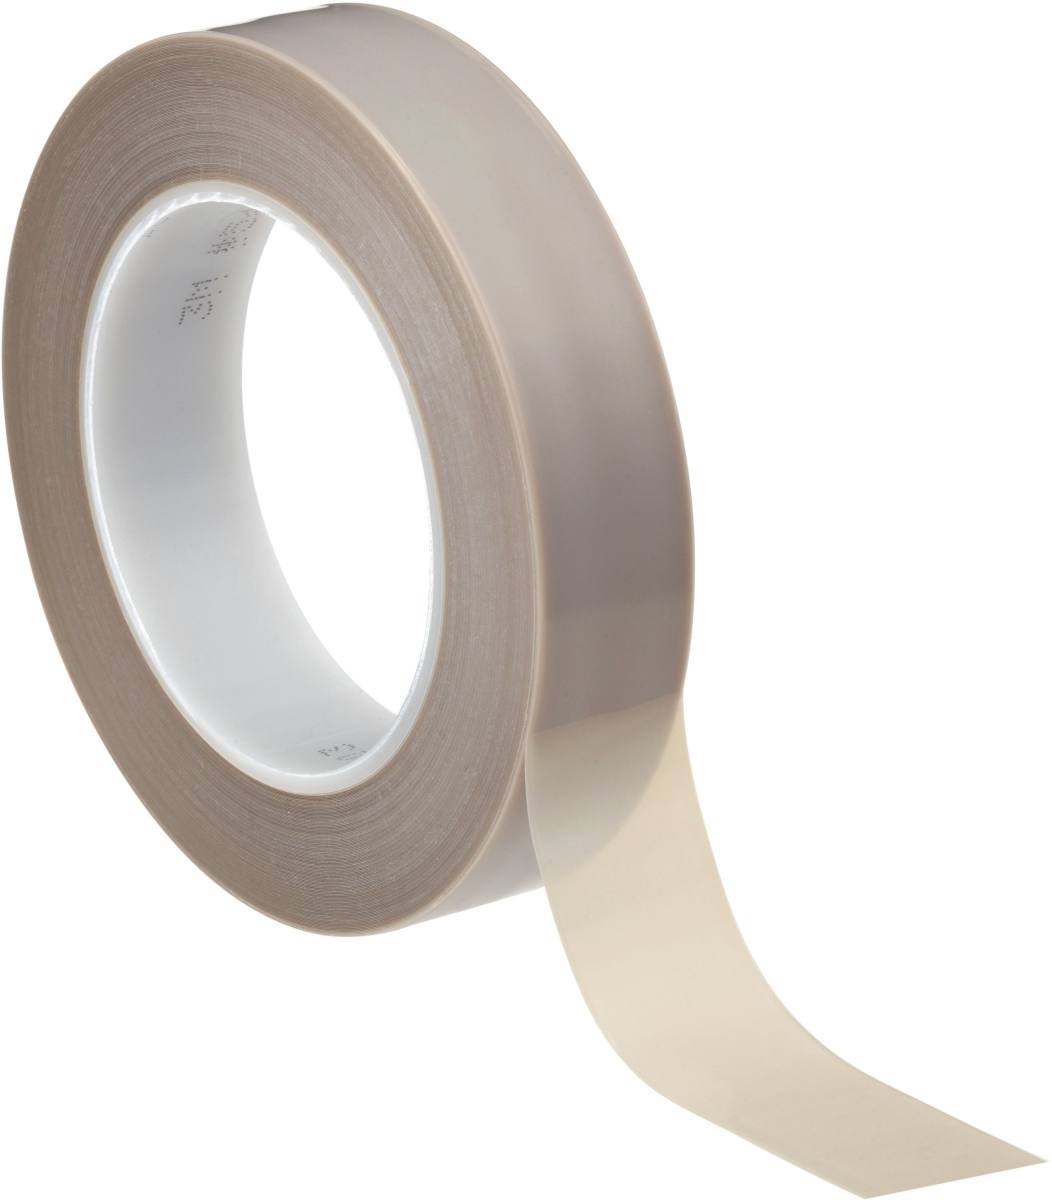 3M 5480 PTFE film adhesive tape 9mmx33m, 0.10mm, silicone